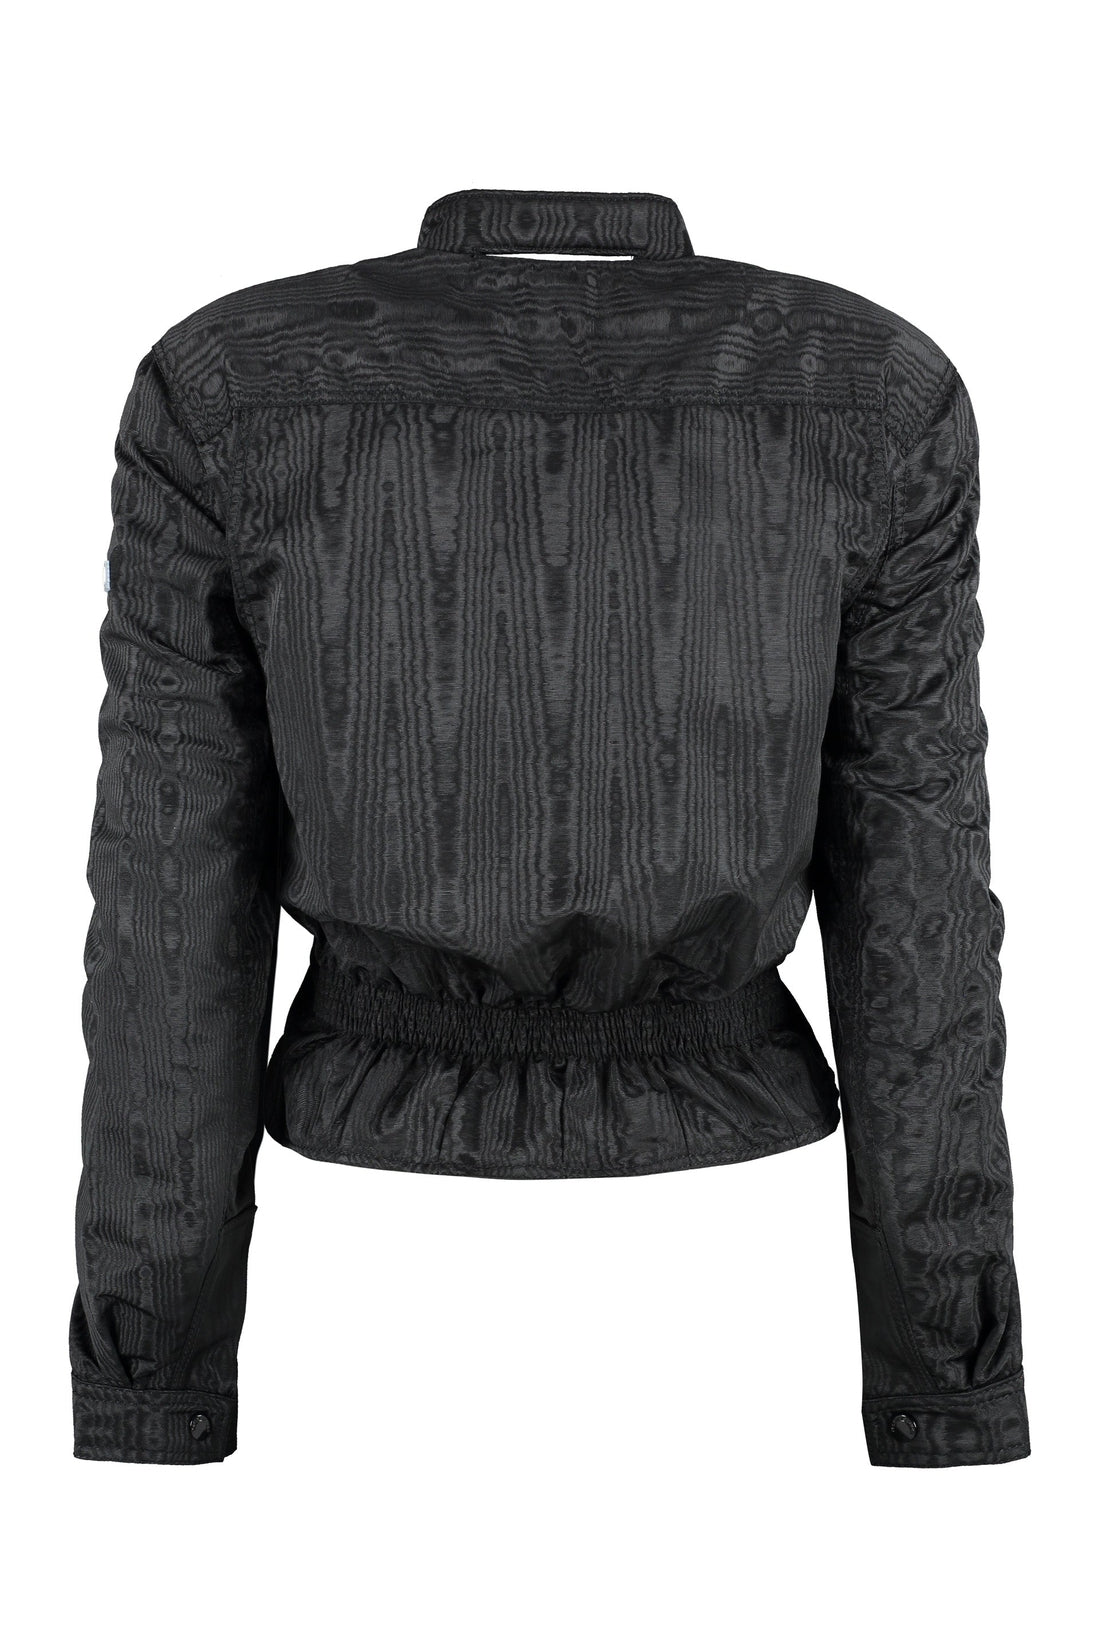 Marine Serre-OUTLET-SALE-Techno fabric jacket-ARCHIVIST